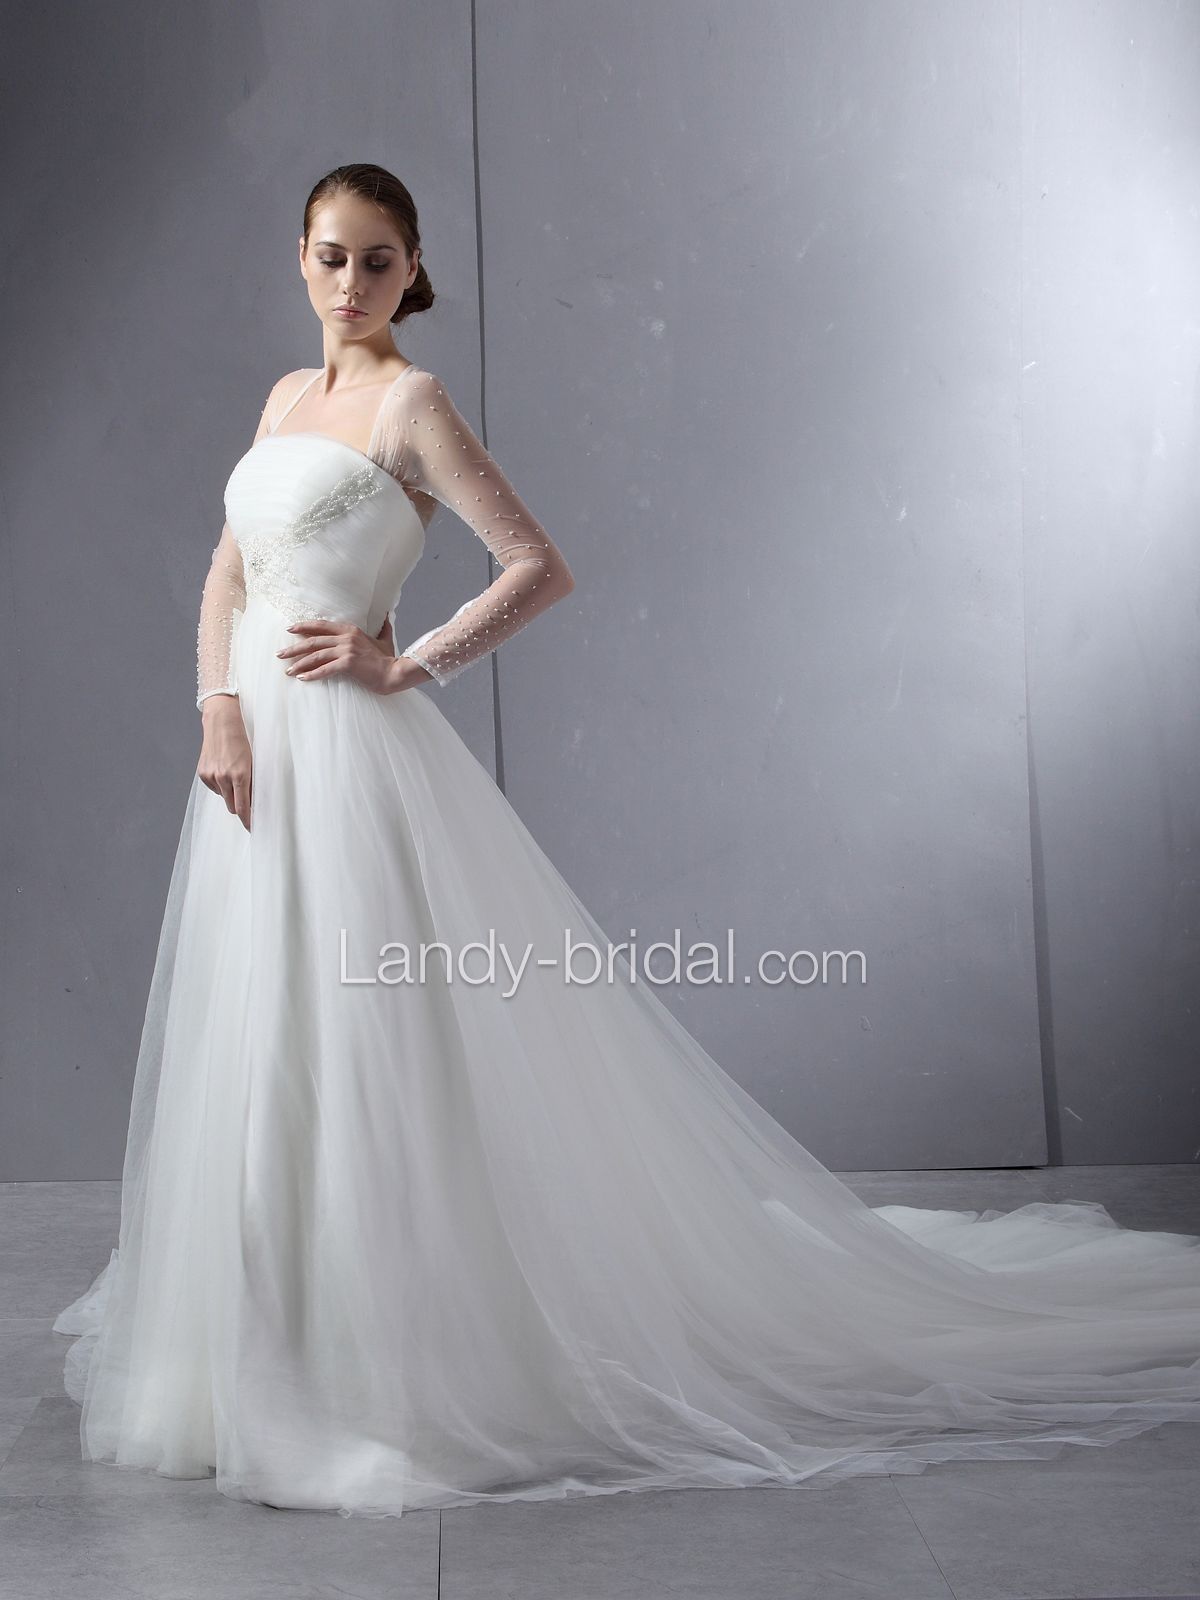 Landybridal Ivory Tulle Beads Wedding Dresses Bridal Gowns Size 